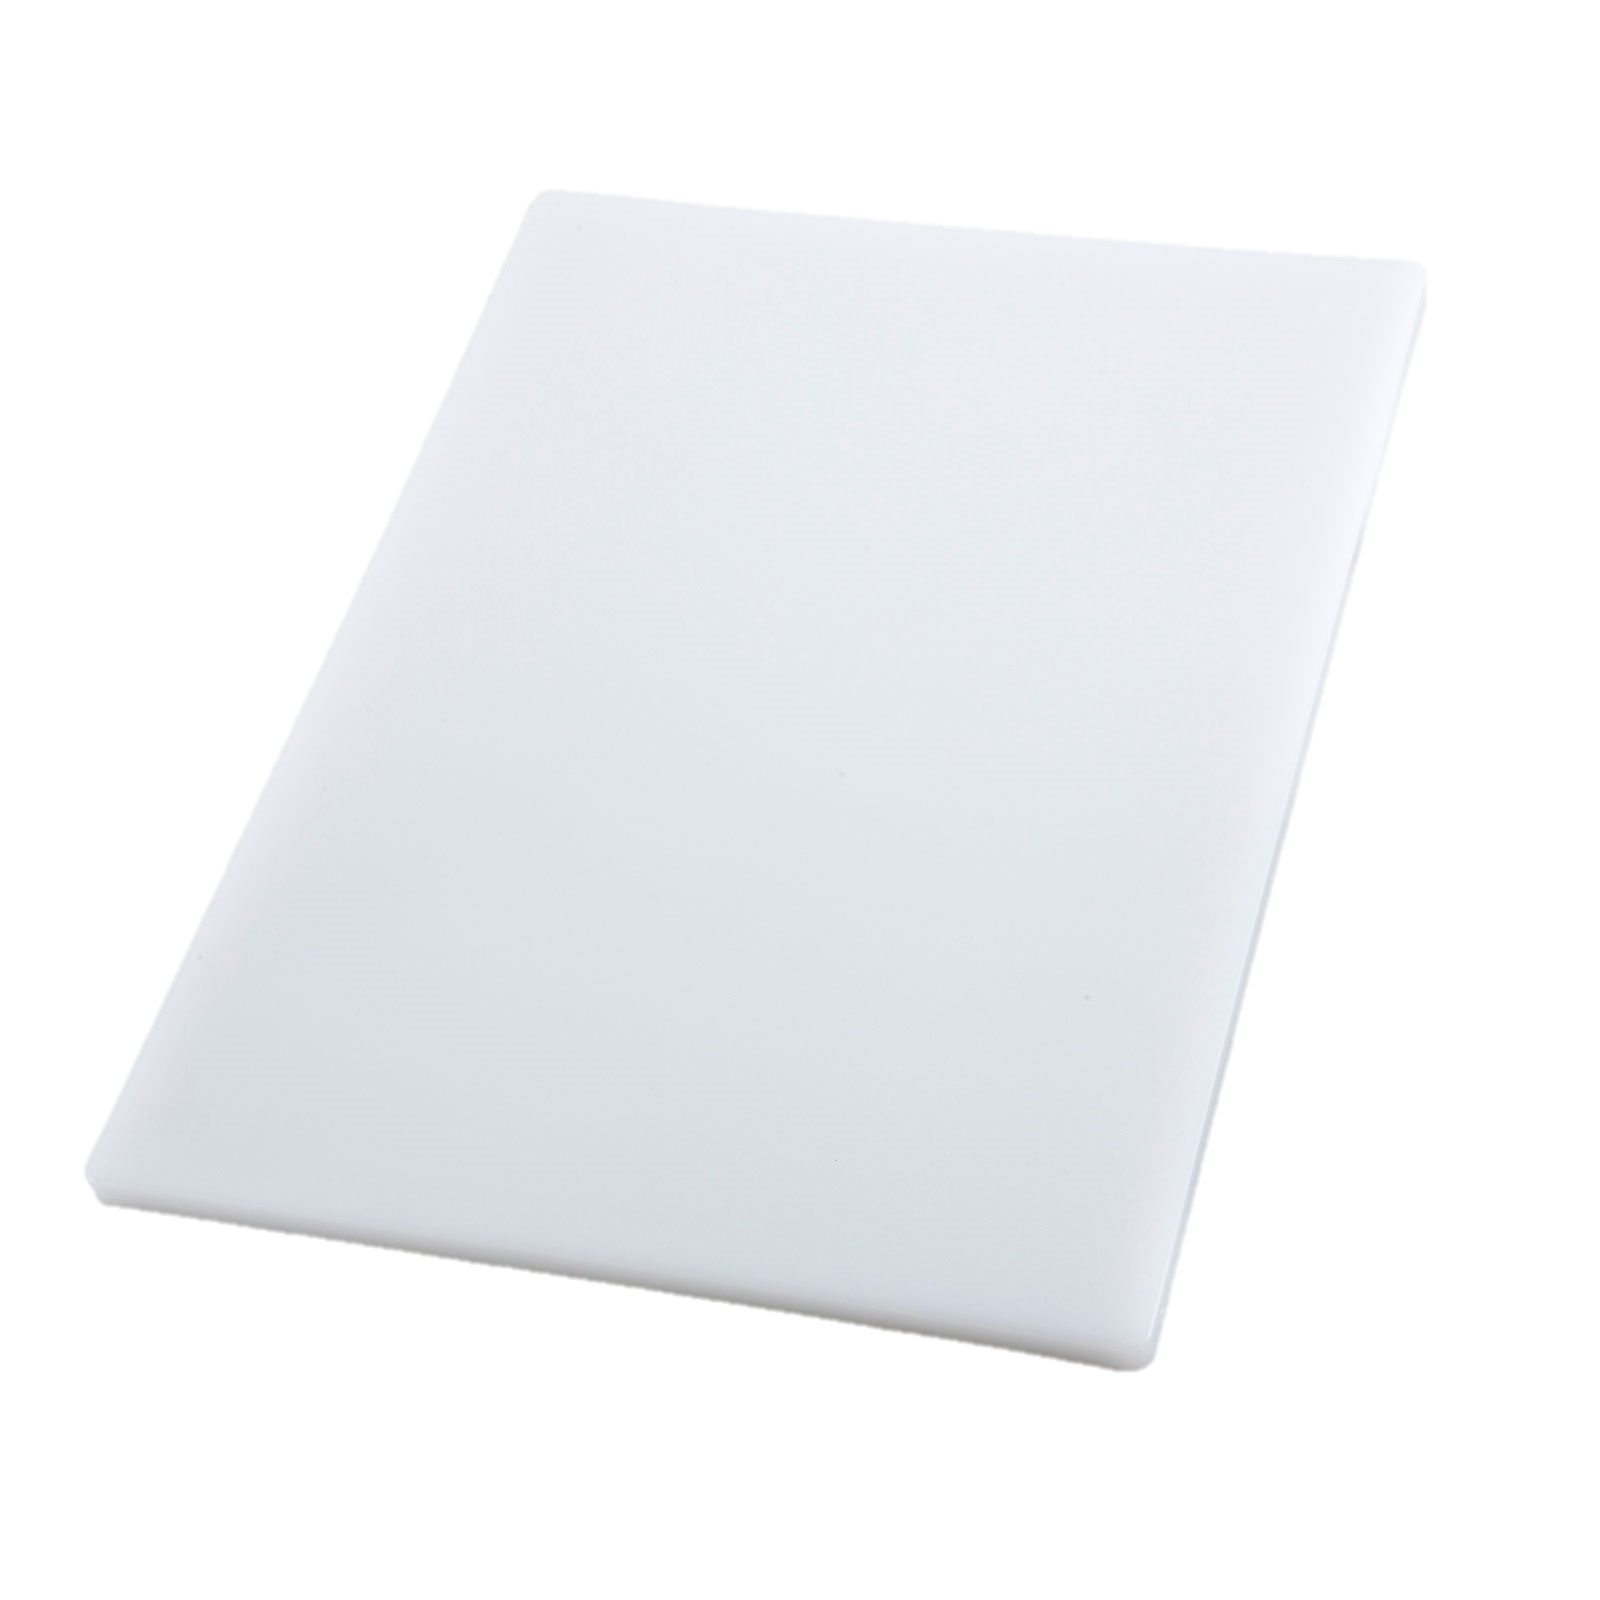 superior-equipment-supply - Winco - Cutting Board White 15" x 20"